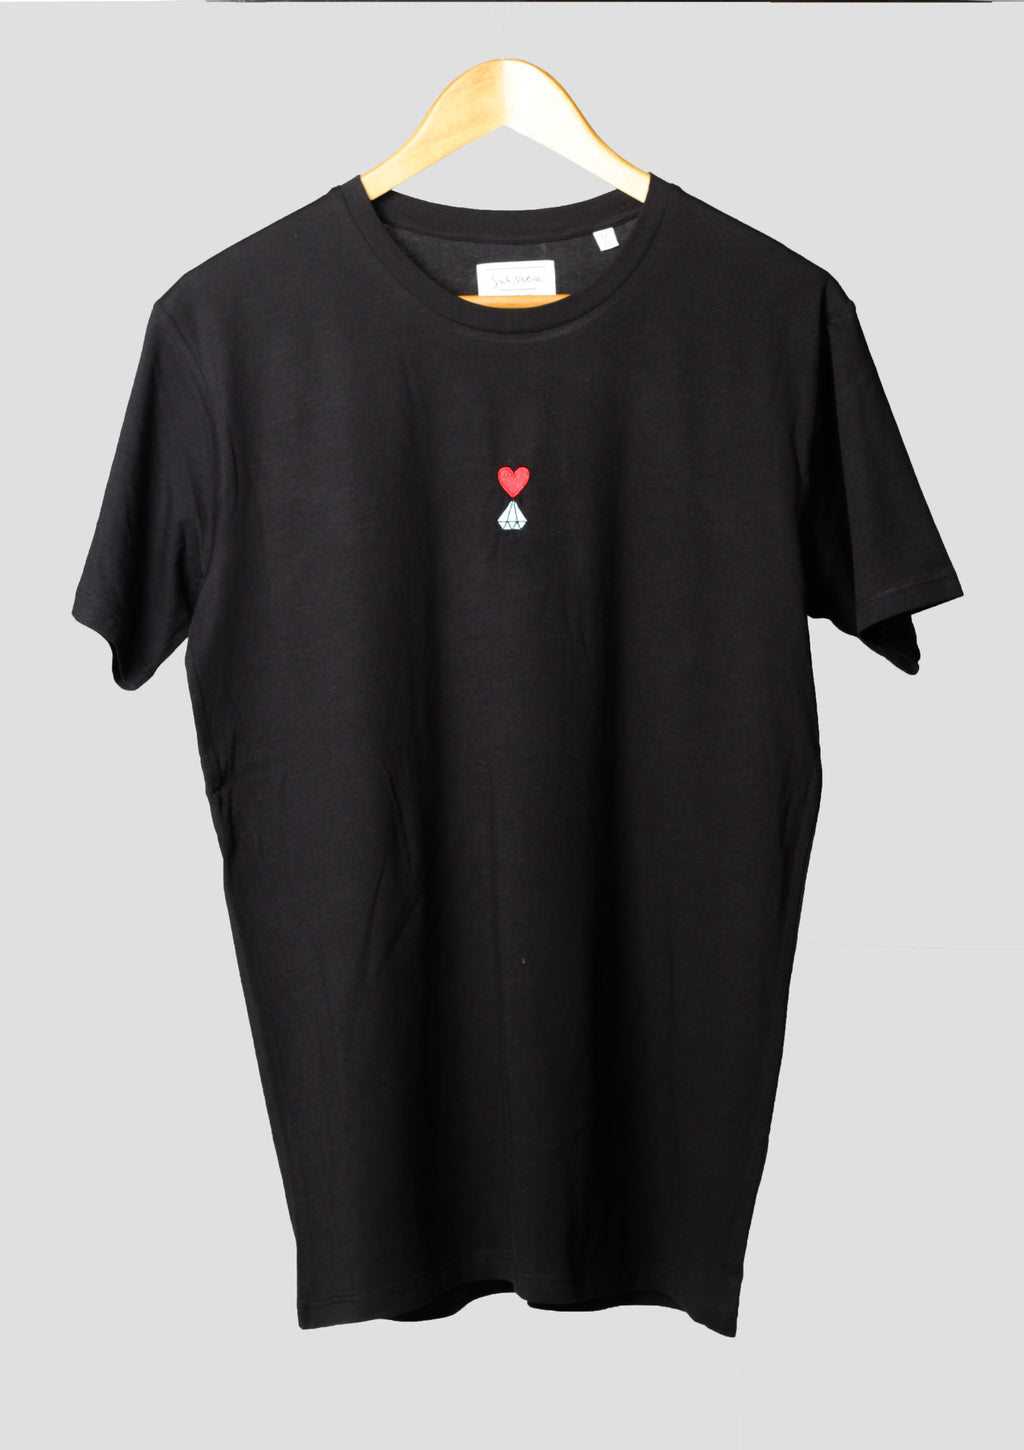 sub native hearts over diamonds embroidered t-shirt black